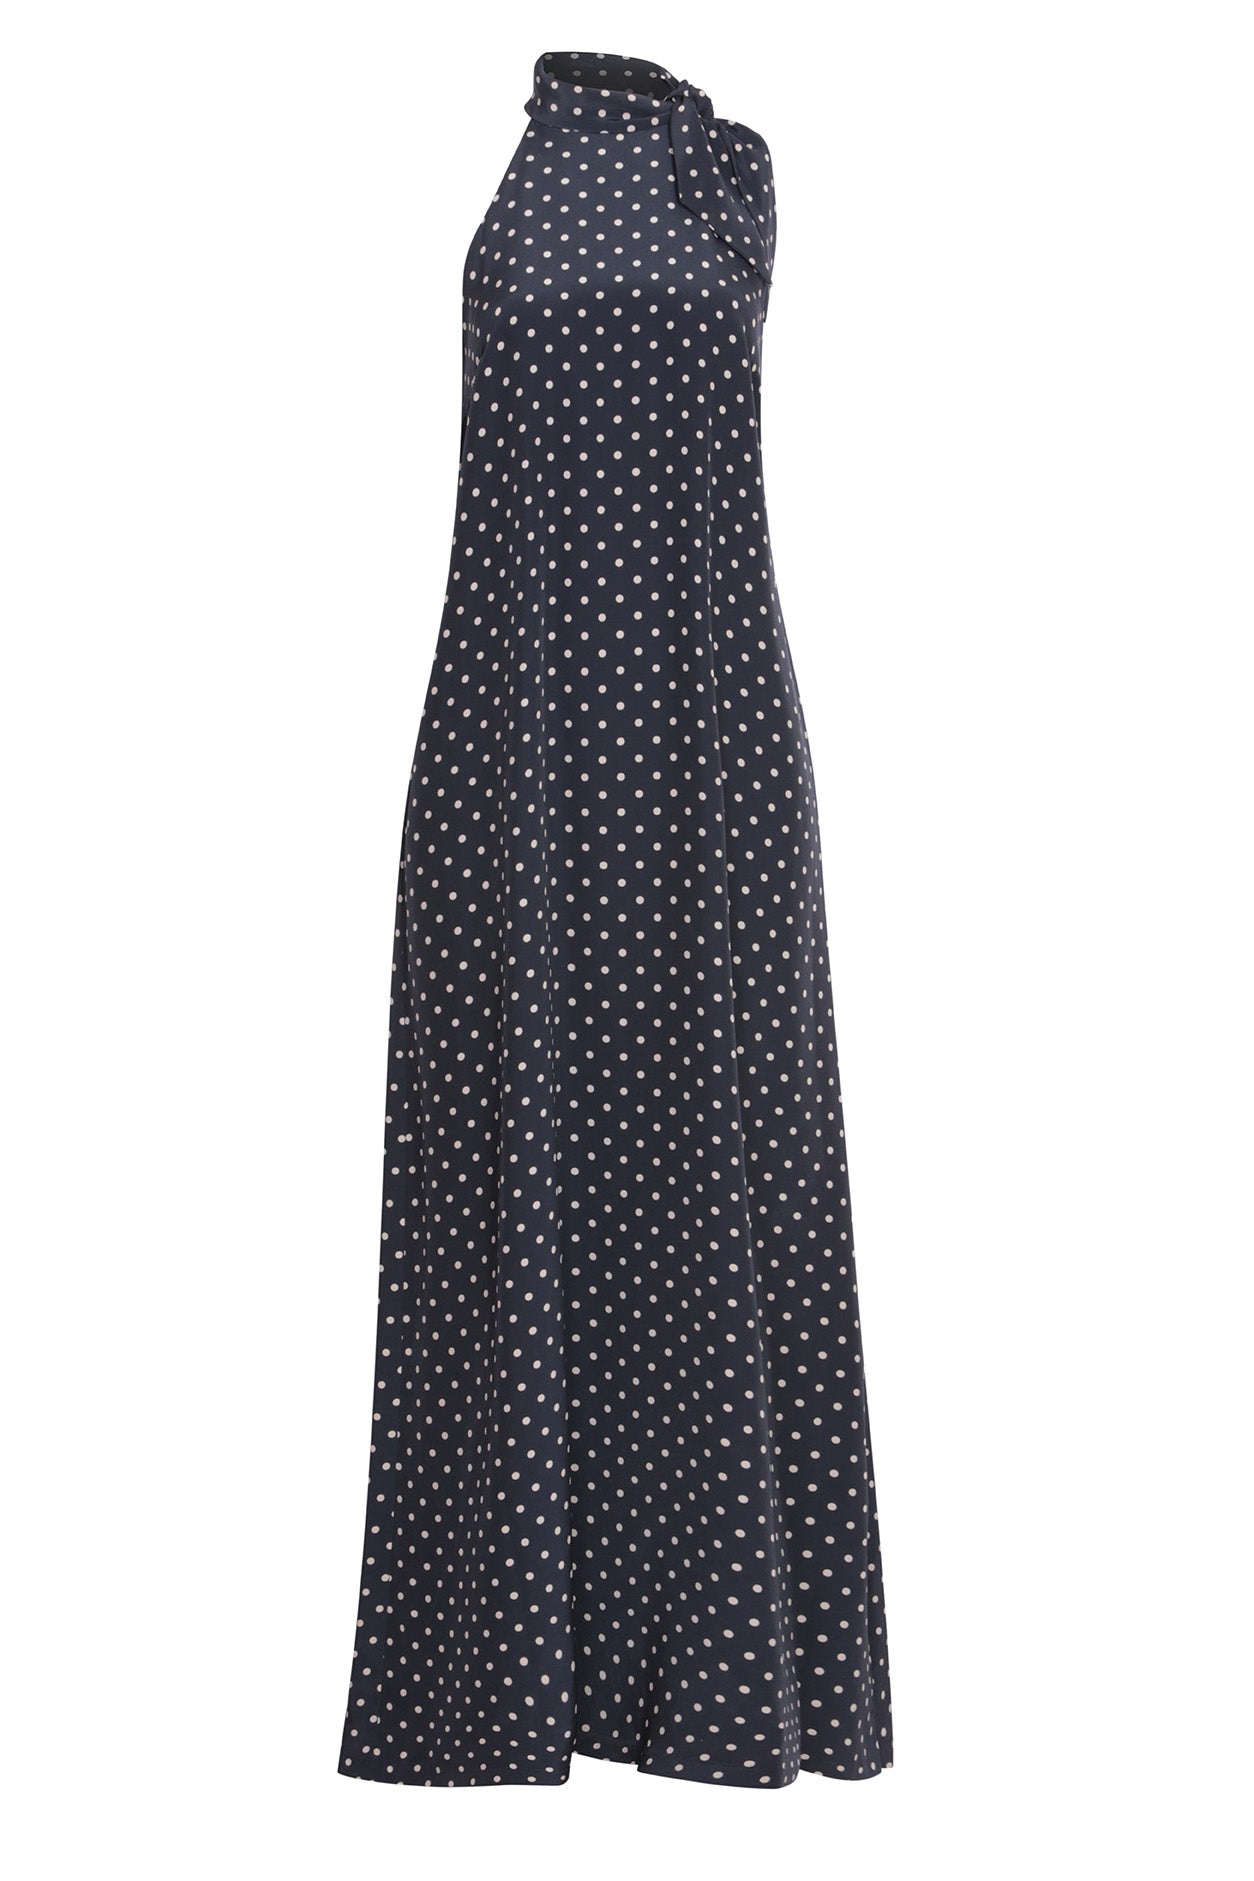 Tie-Neck Navy Silk Maxi Dress with Ivory Spots - Alice Long